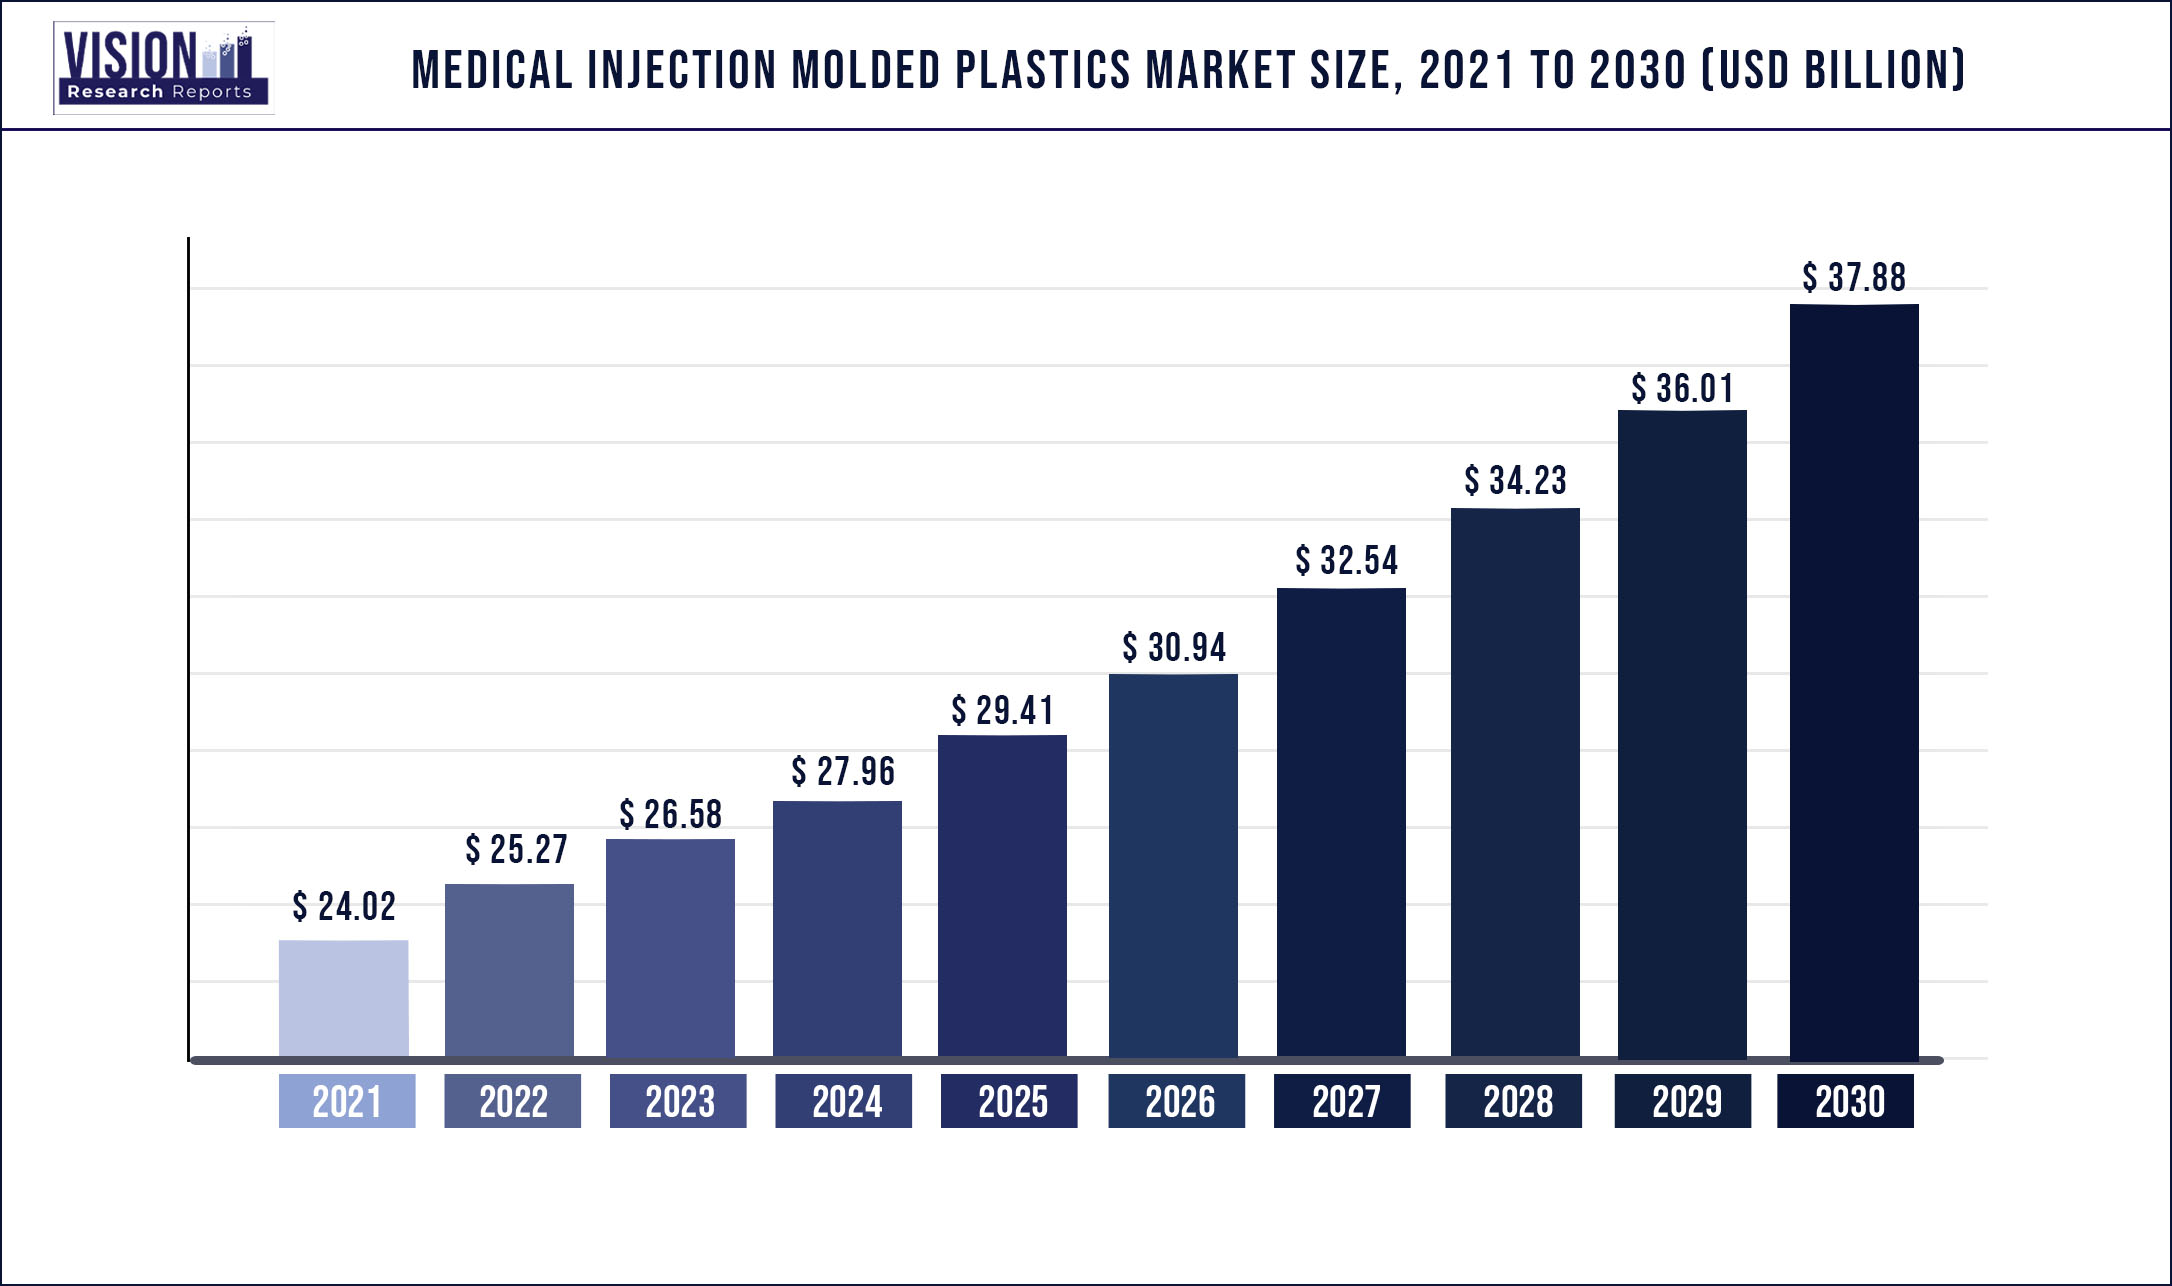 Medical Injection Molded Plastics Market Size 2021 to 2030